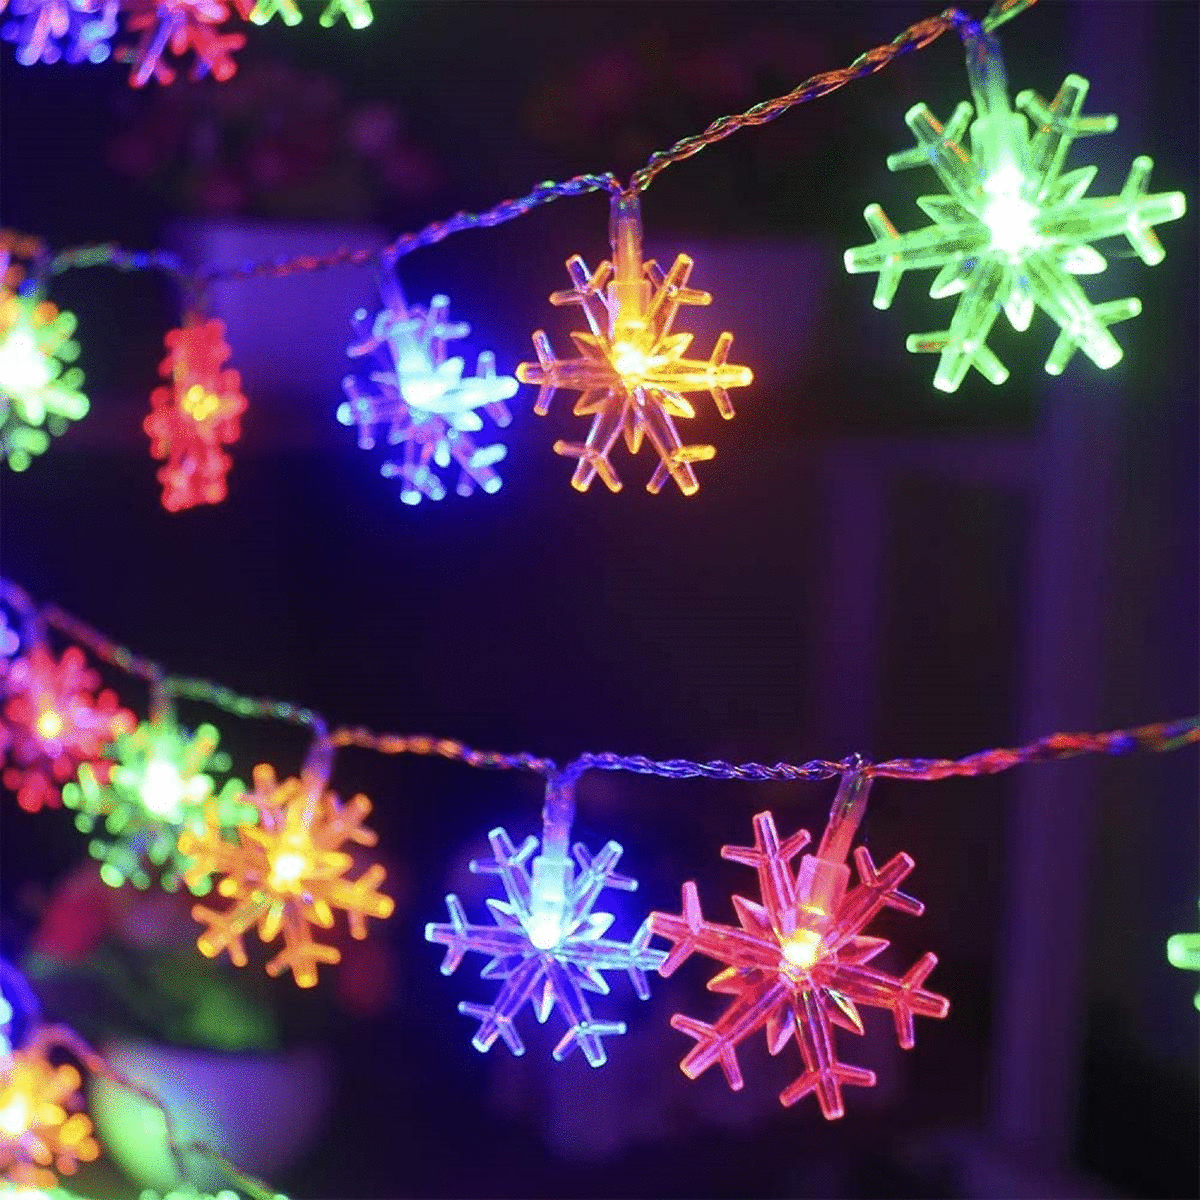 Multi-Coloured The Christmas Xmas Lights 6m Flashing Rope Light